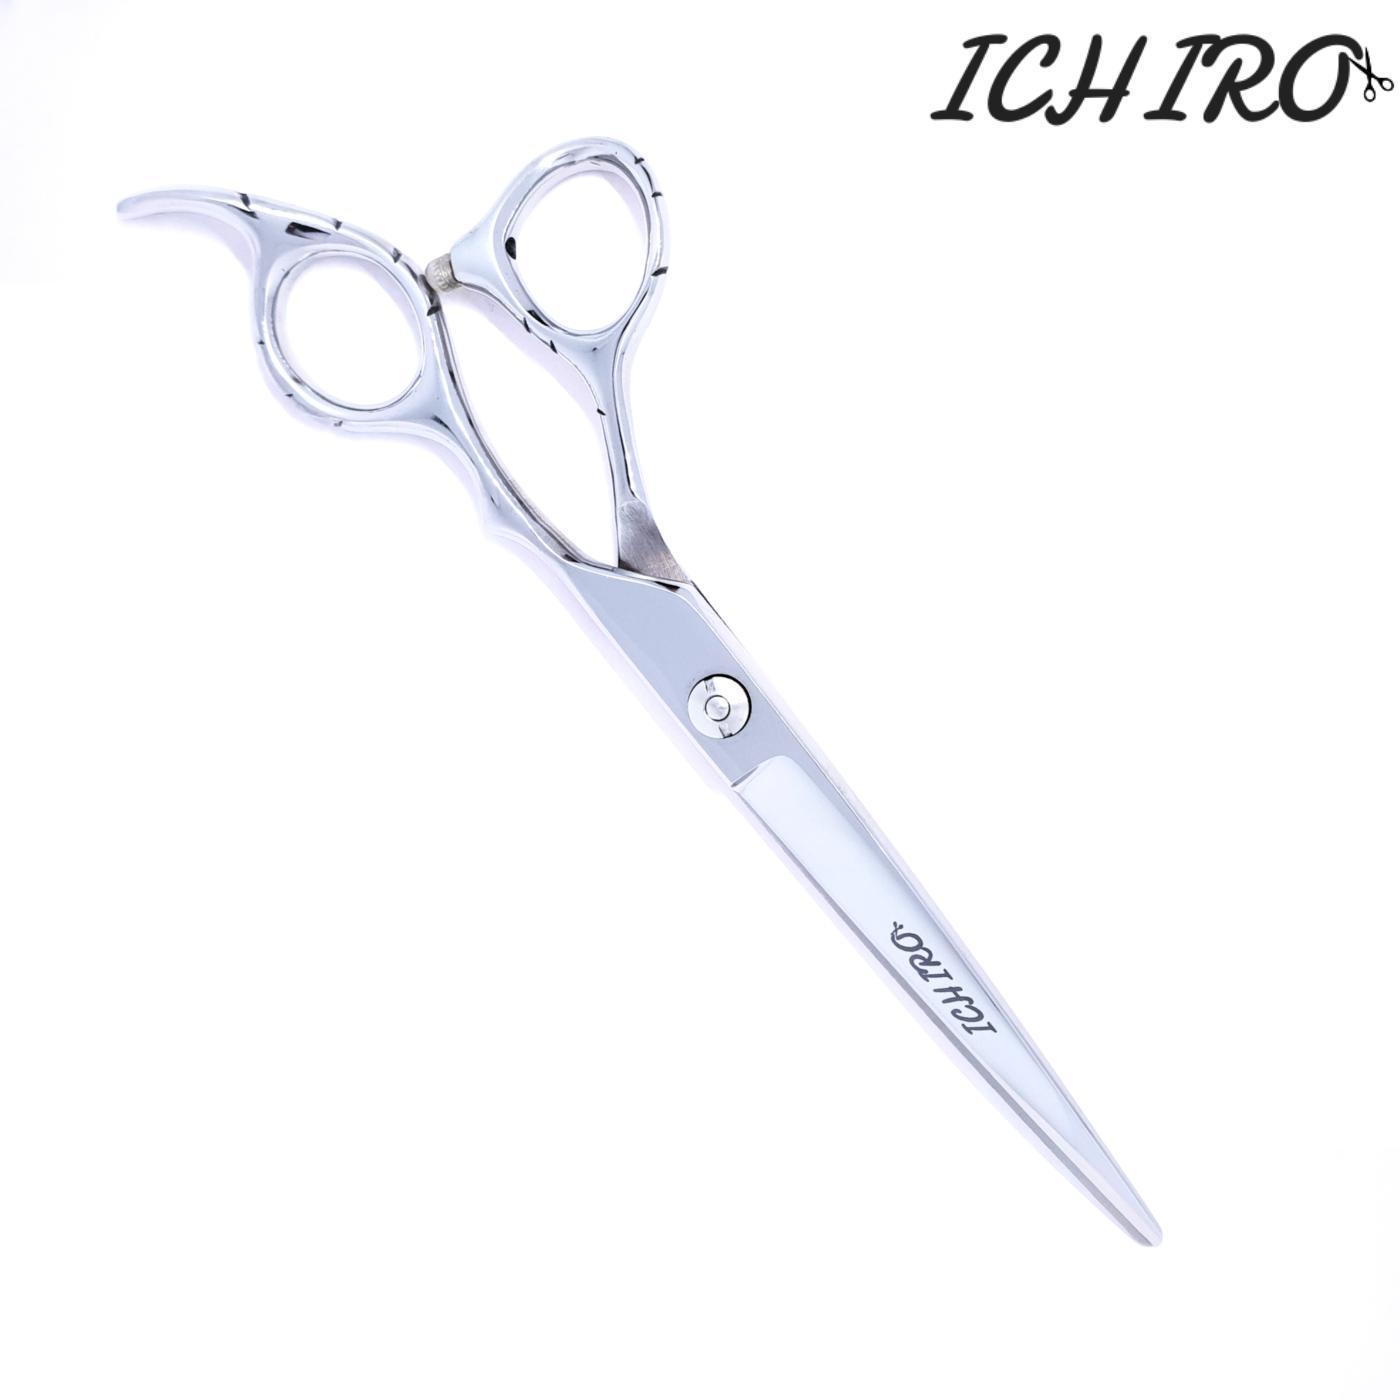 Ichiro Barber Hair Cutting Shear - Japan Scissors USA